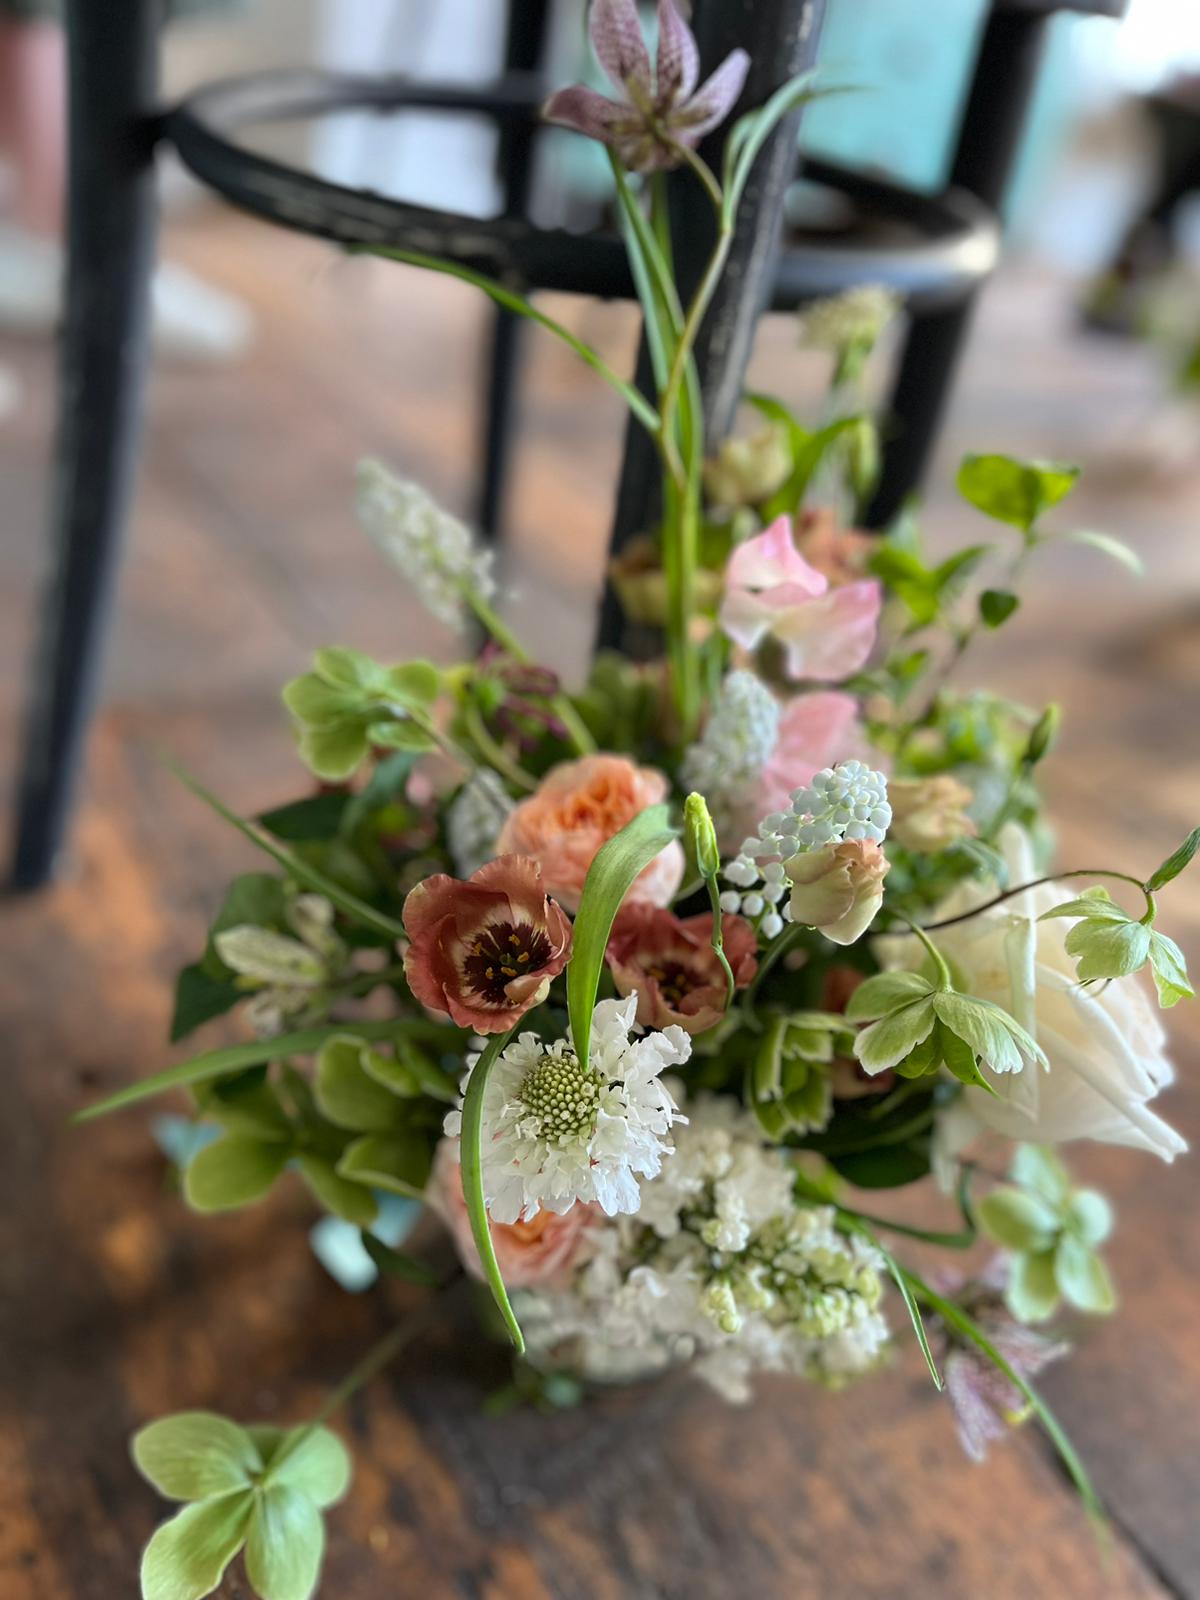 South west florist, devizes wedding florist, devizes florist, wedding flowers, floral installation, romantic flowers for wedding 